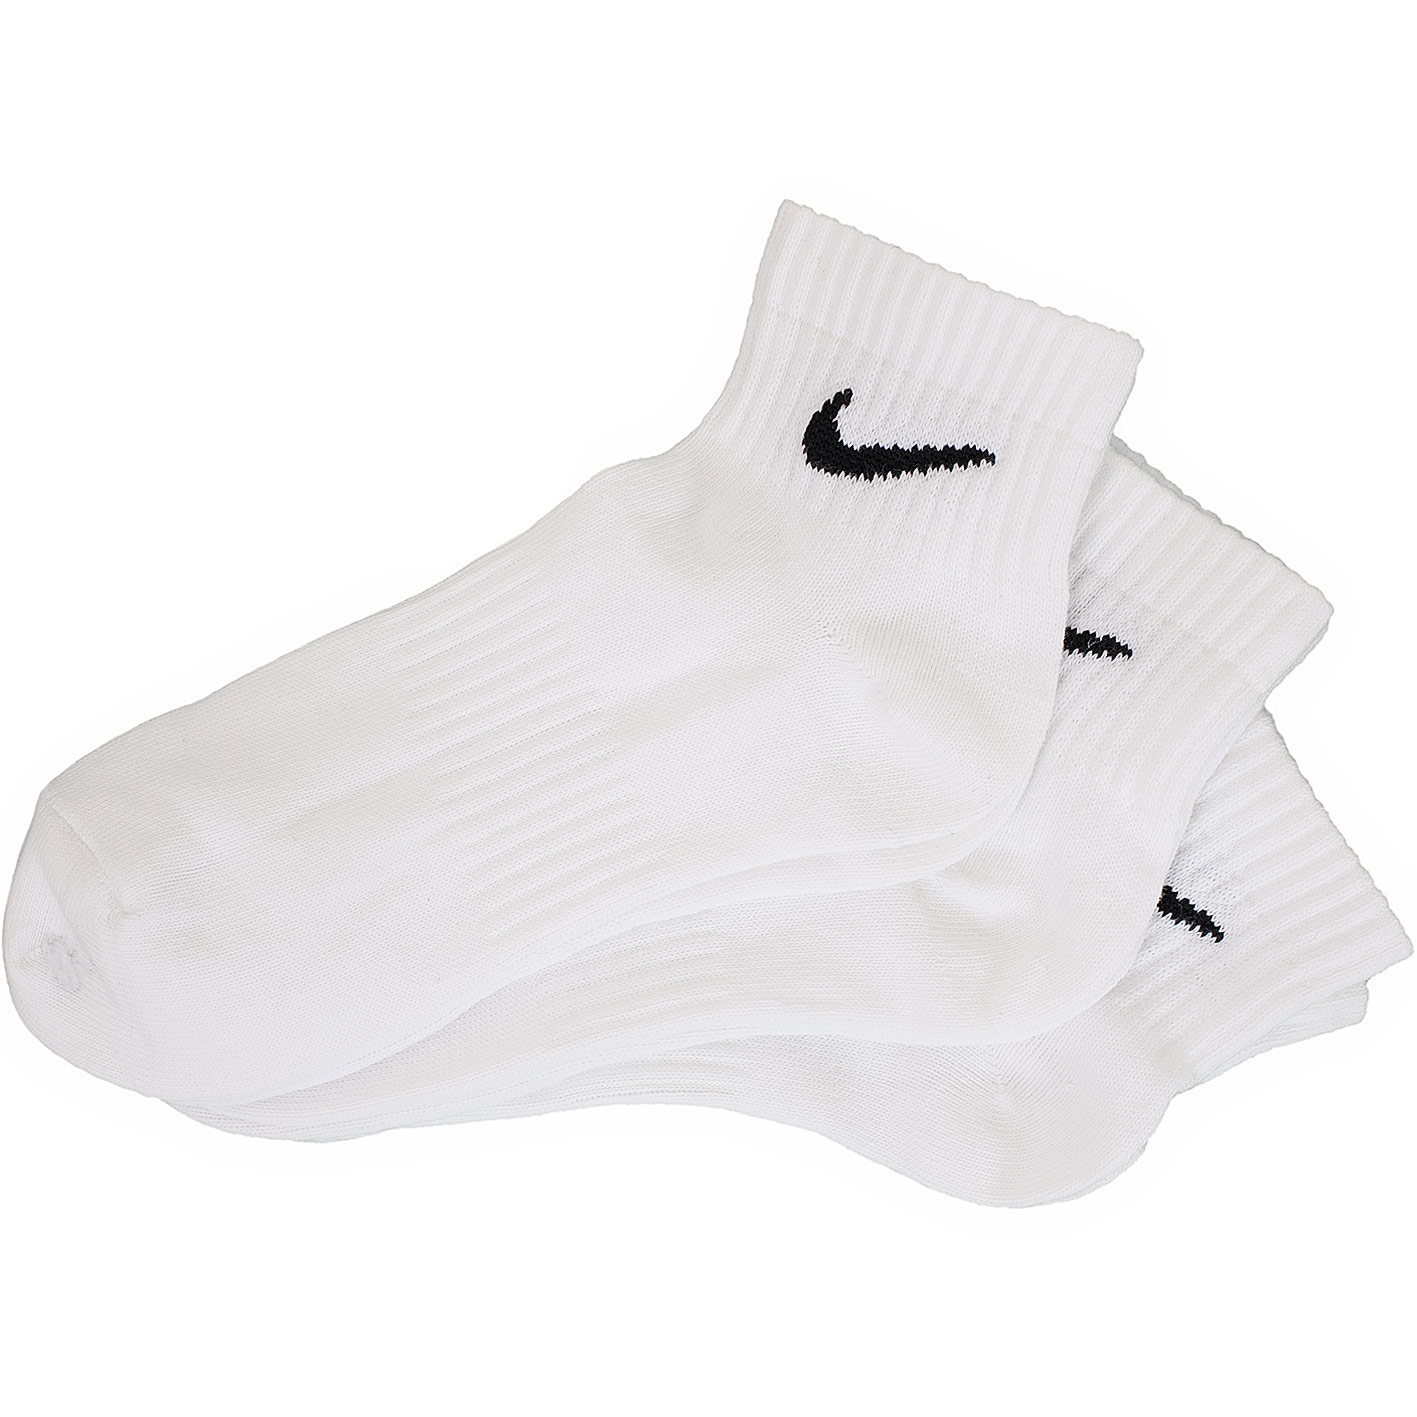 ☆ Nike Socken Lightweight Quarter 3er weiß/schwarz - hier bestellen!